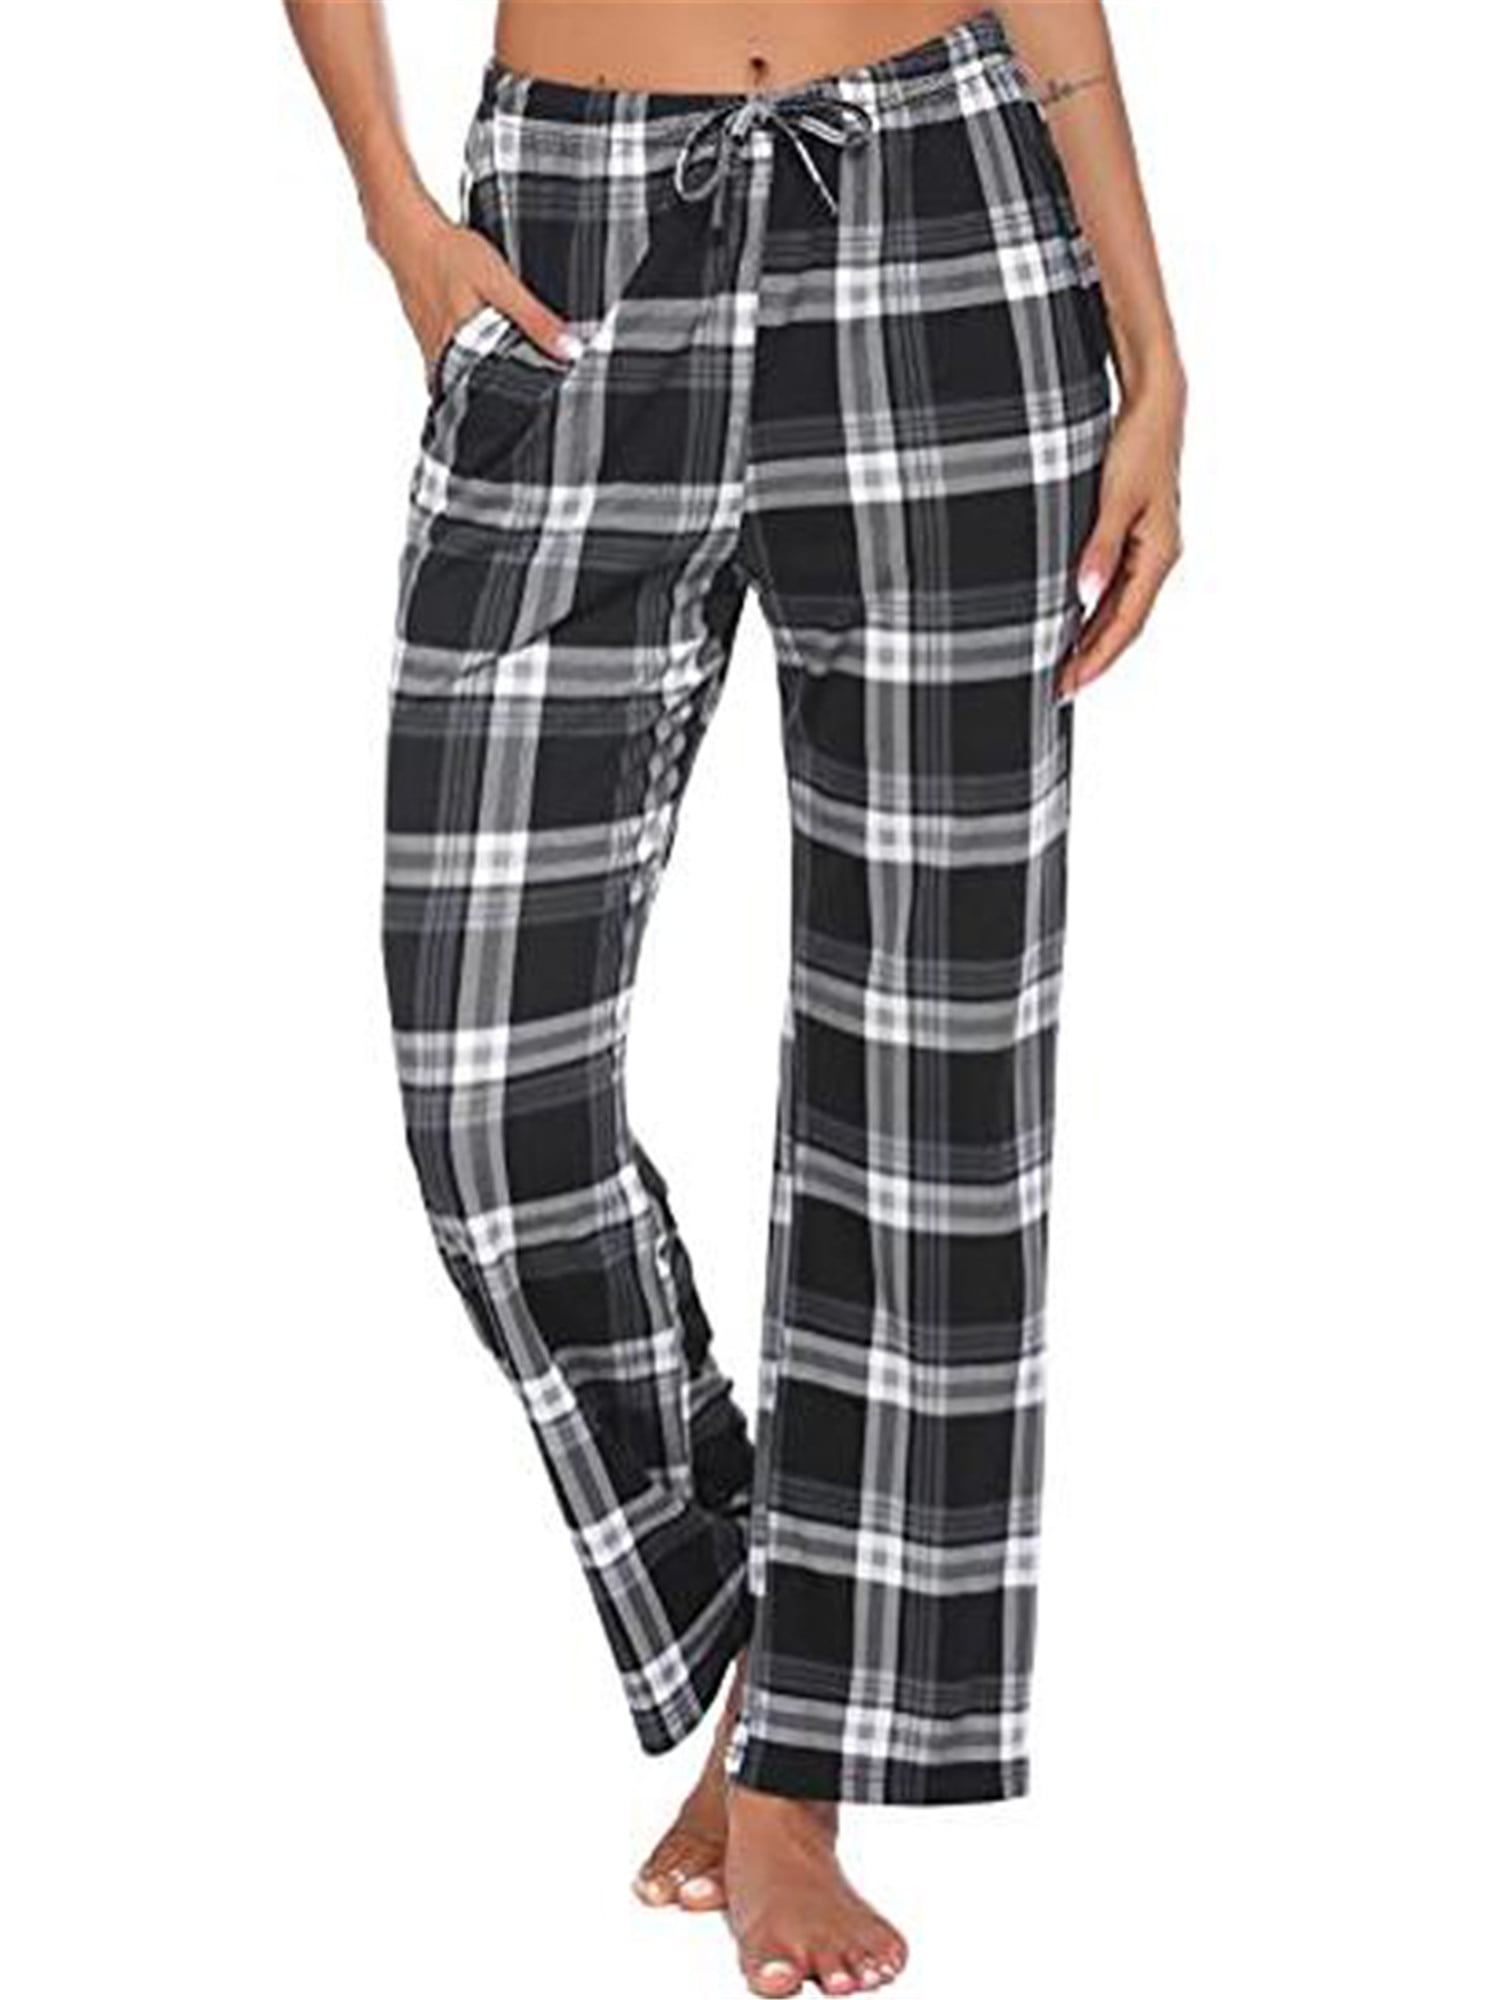 Ekouaer Women's Lounge Pants Comfy Pajama Bottom with Pockets Stretch Plaid Sleepwear Drawstring Pj Sleep Bottoms Pants 